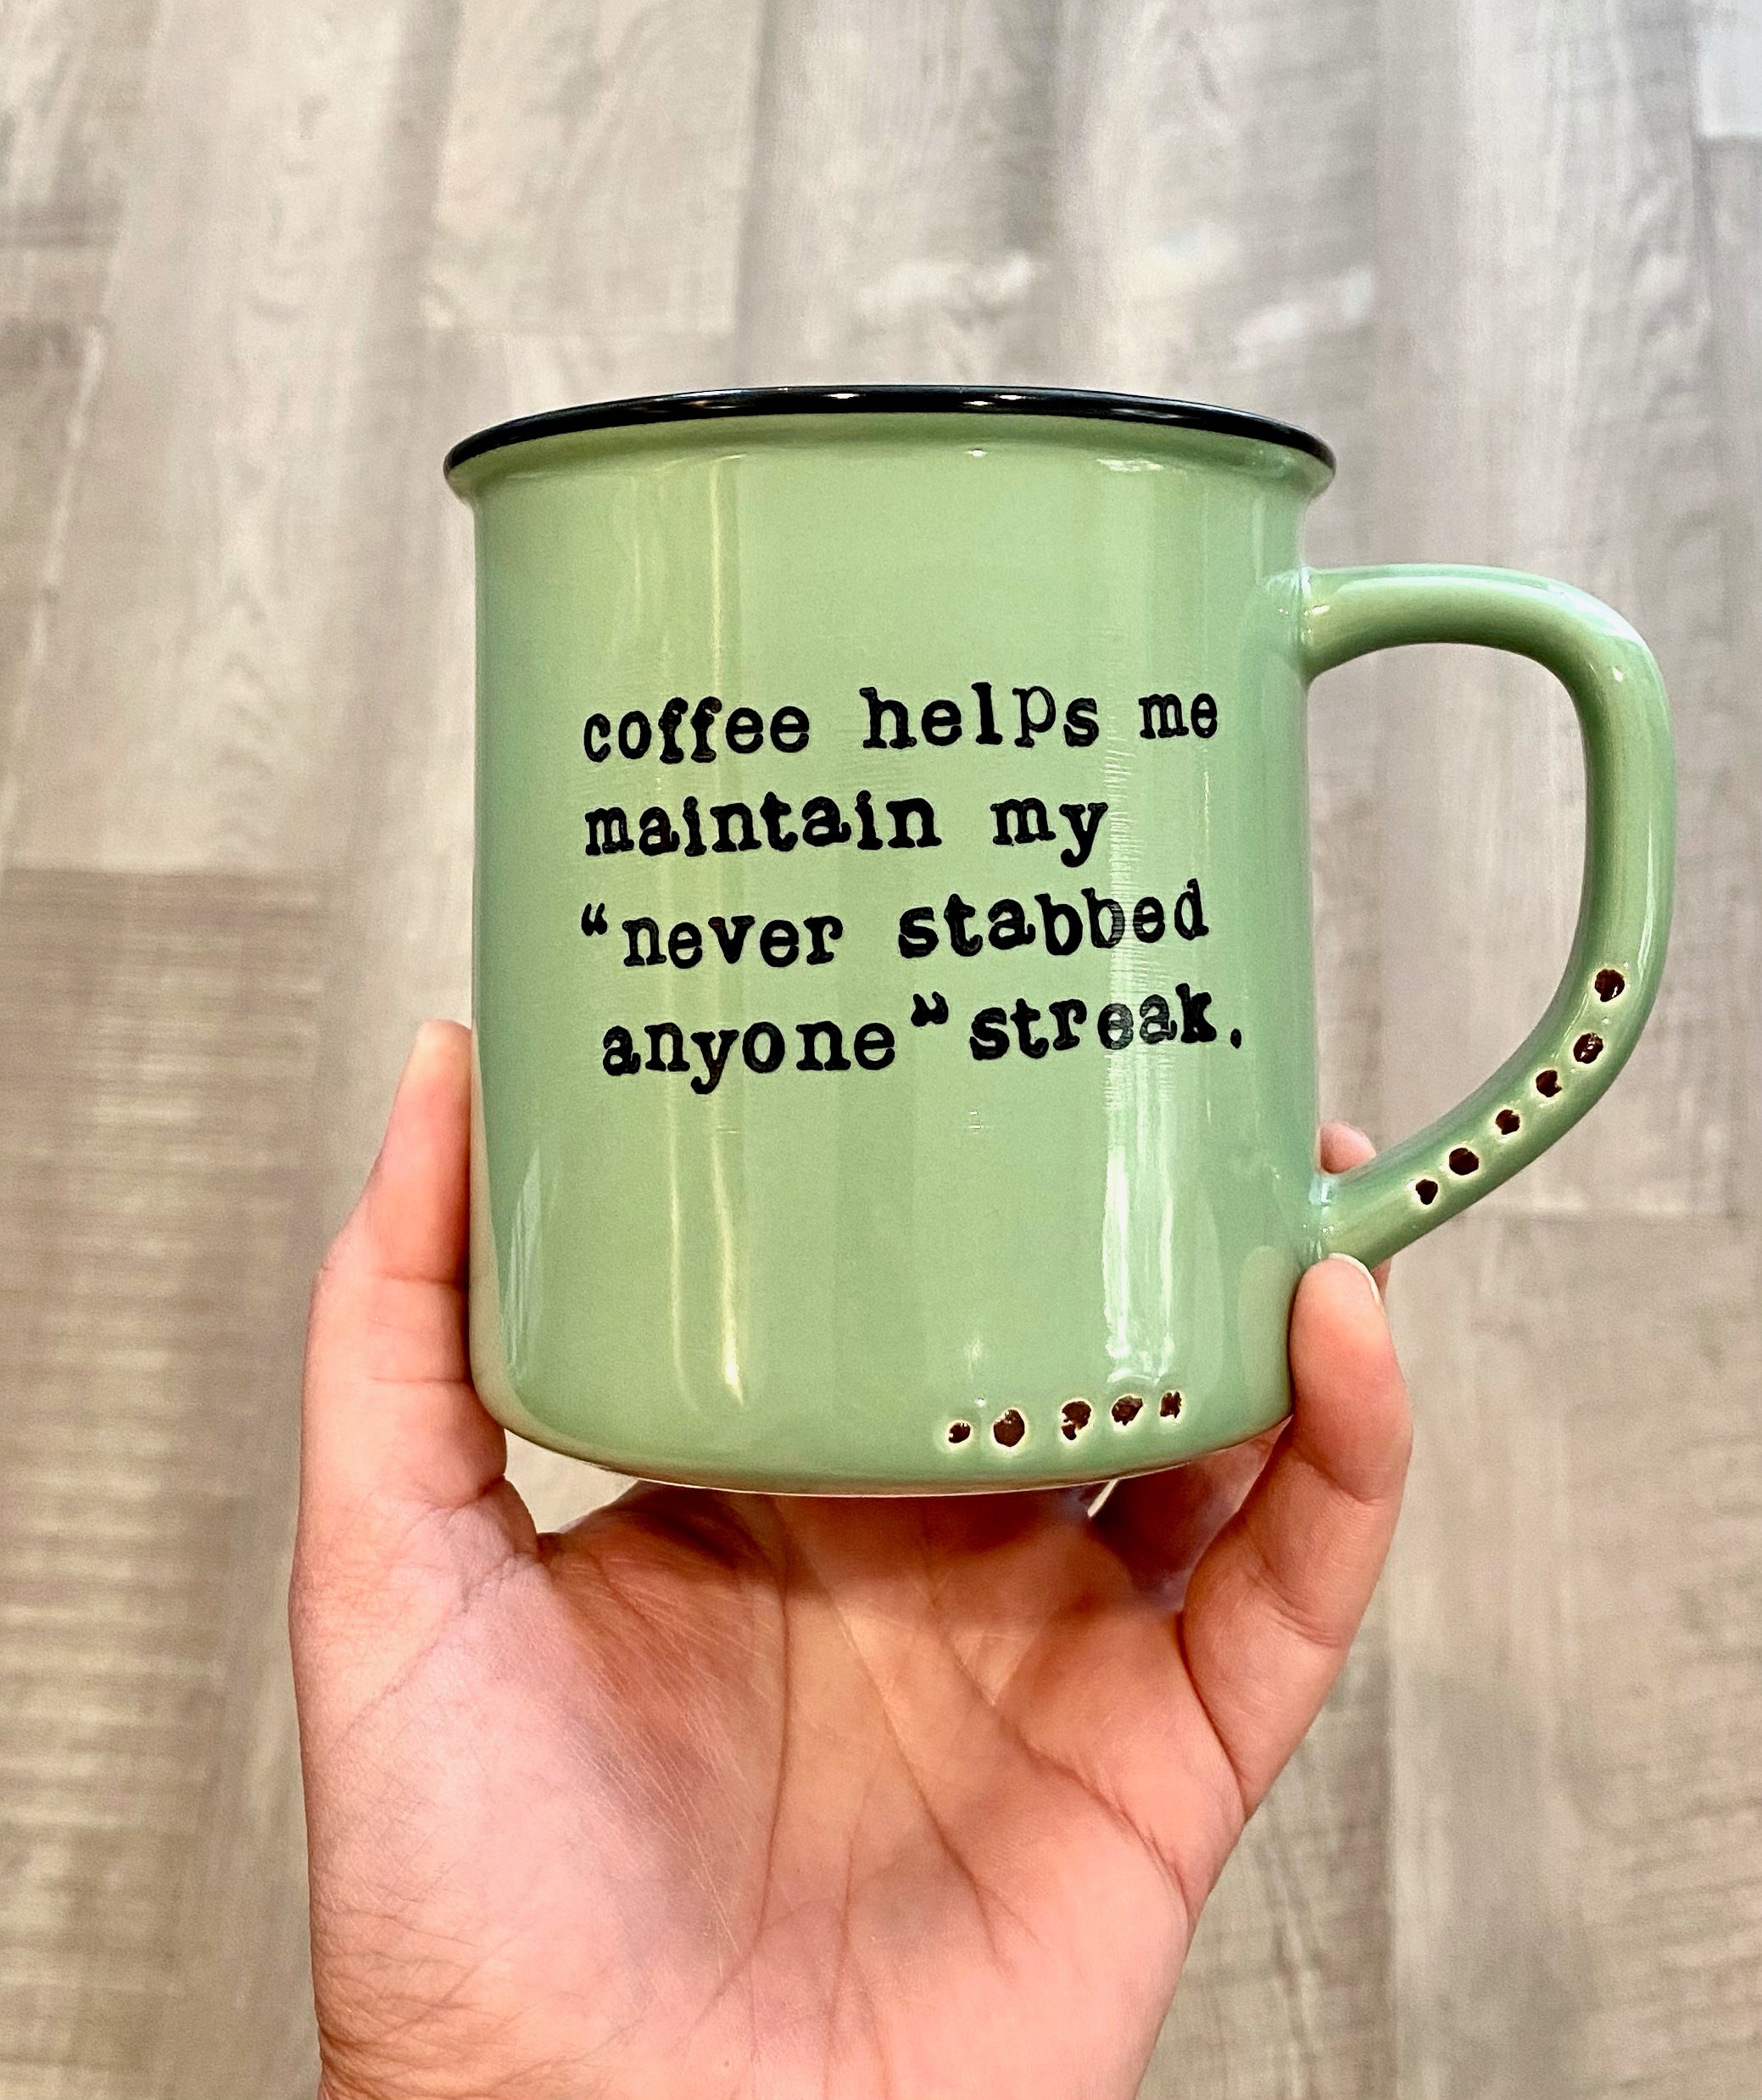 Coffee helps me maintain my "never stabbed anyone" streak.